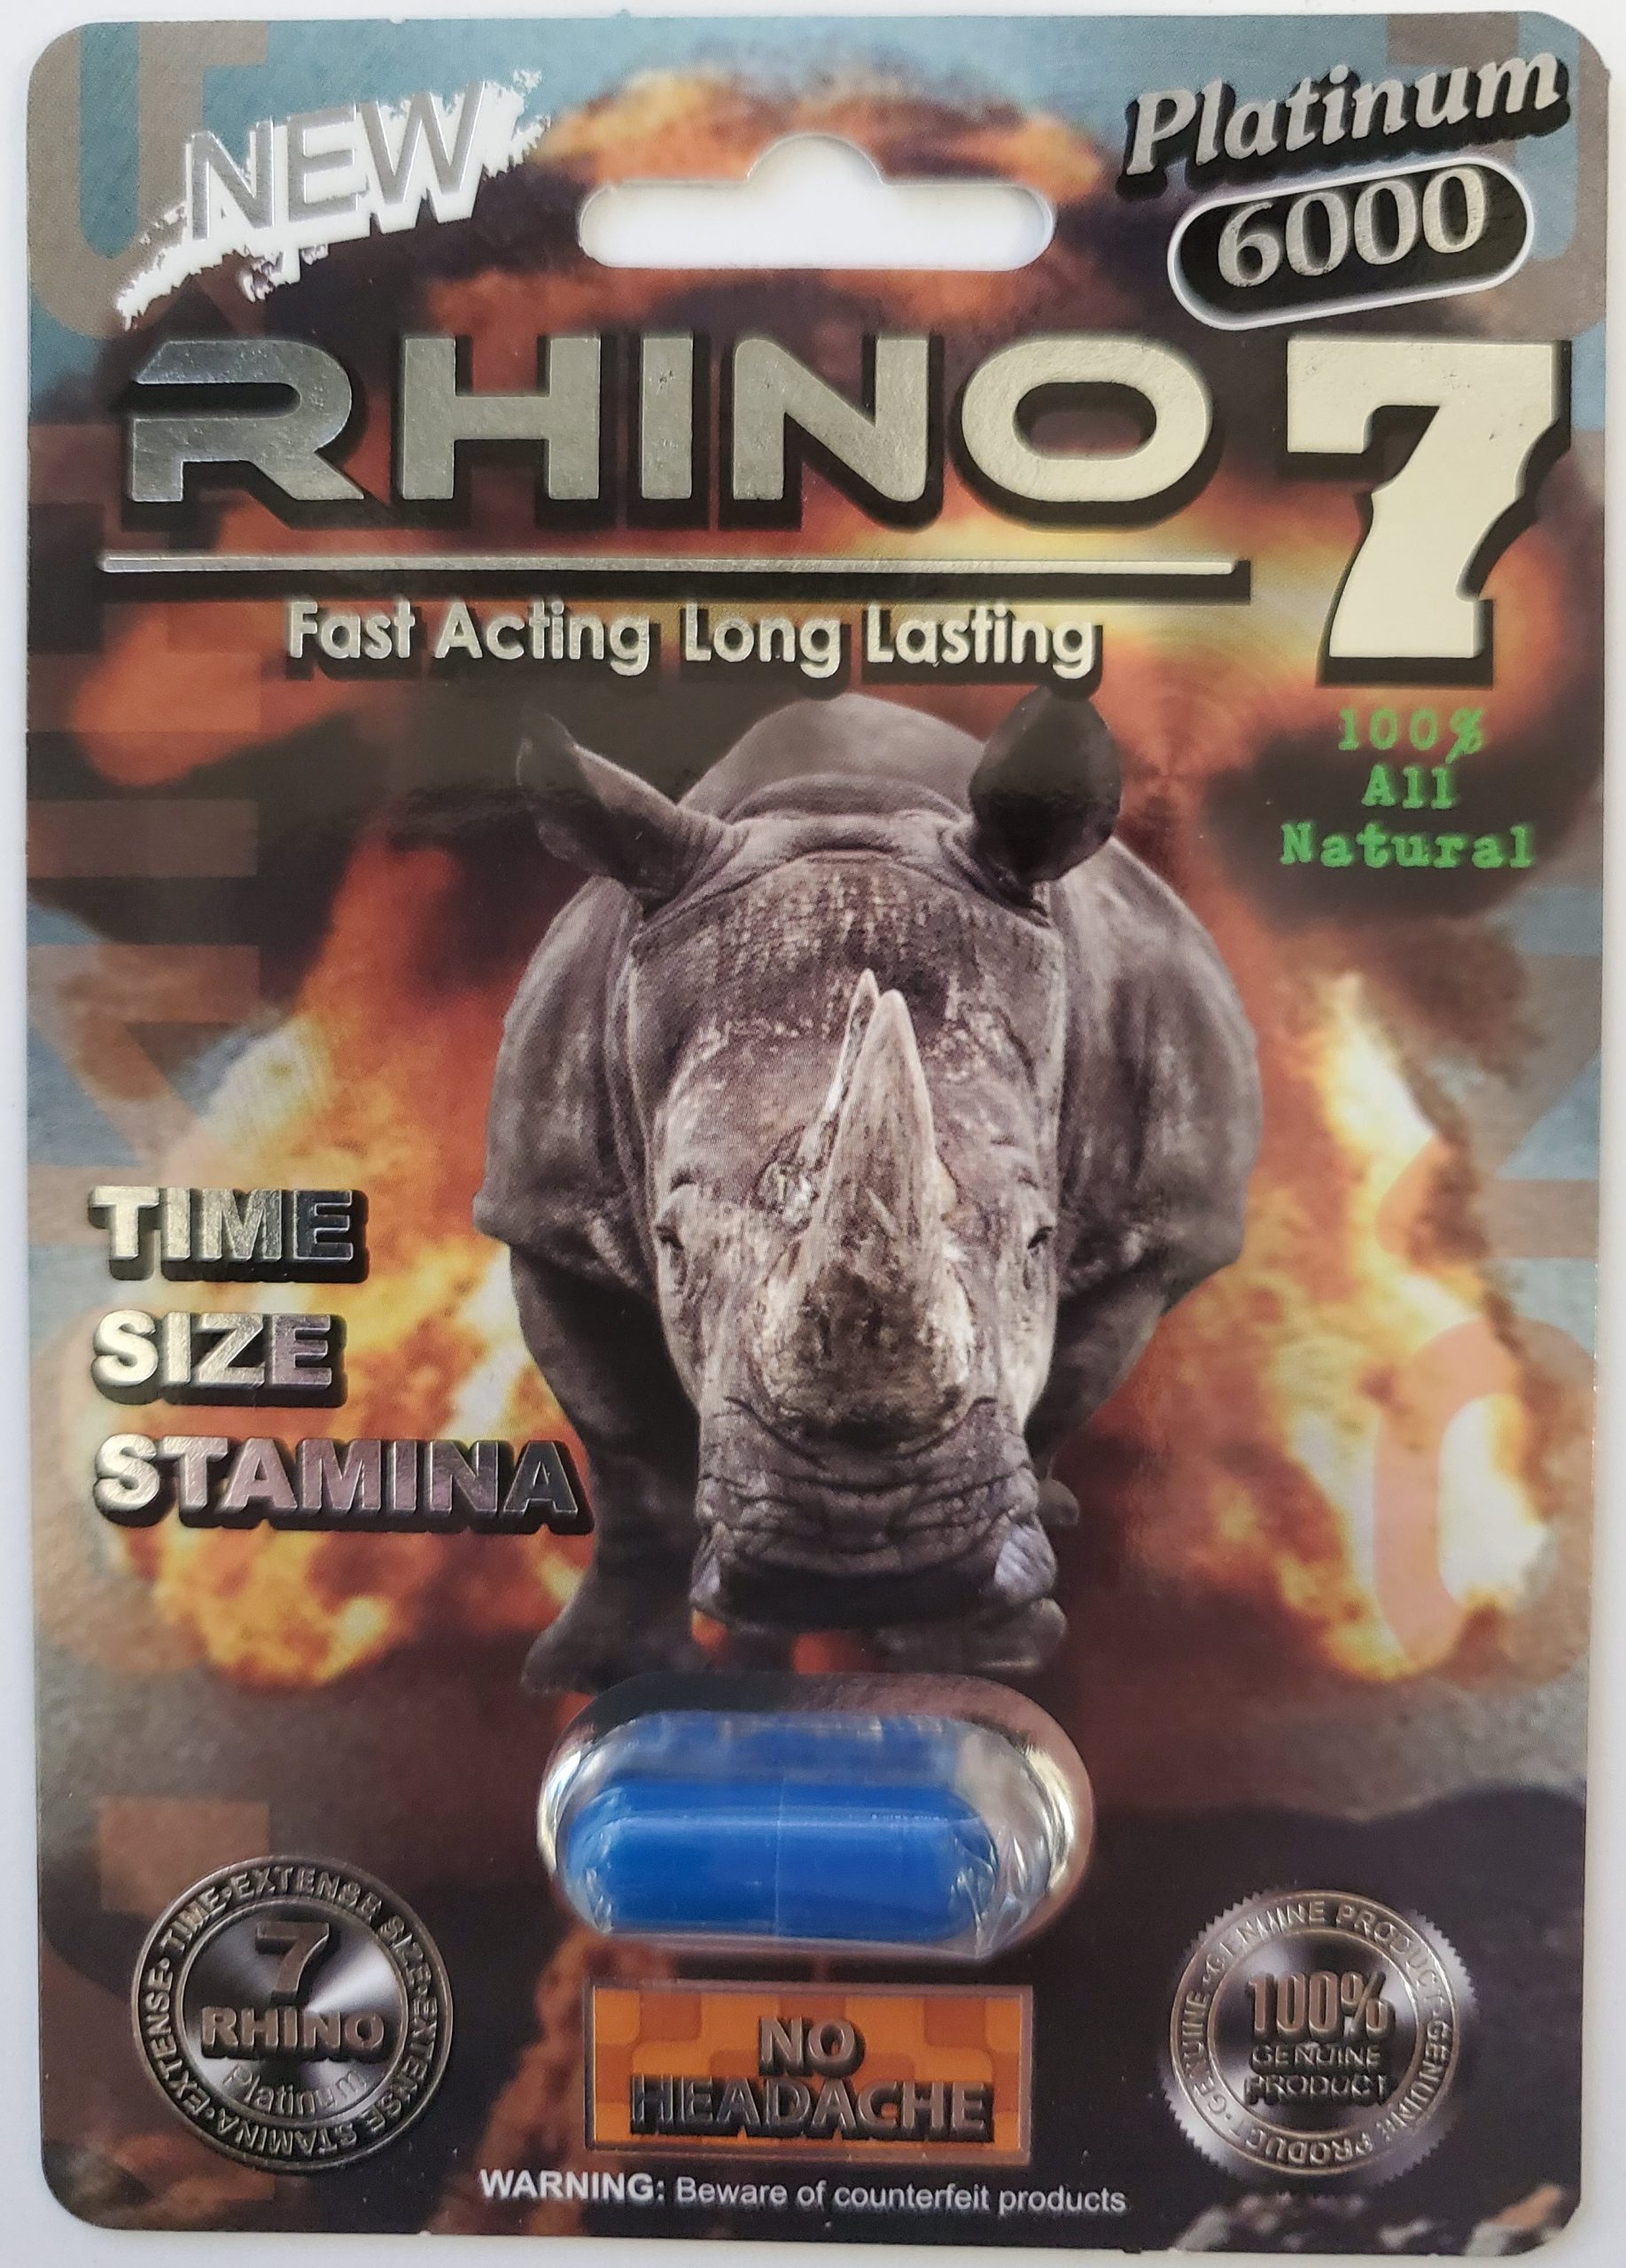 platinum 3000 rhino 7